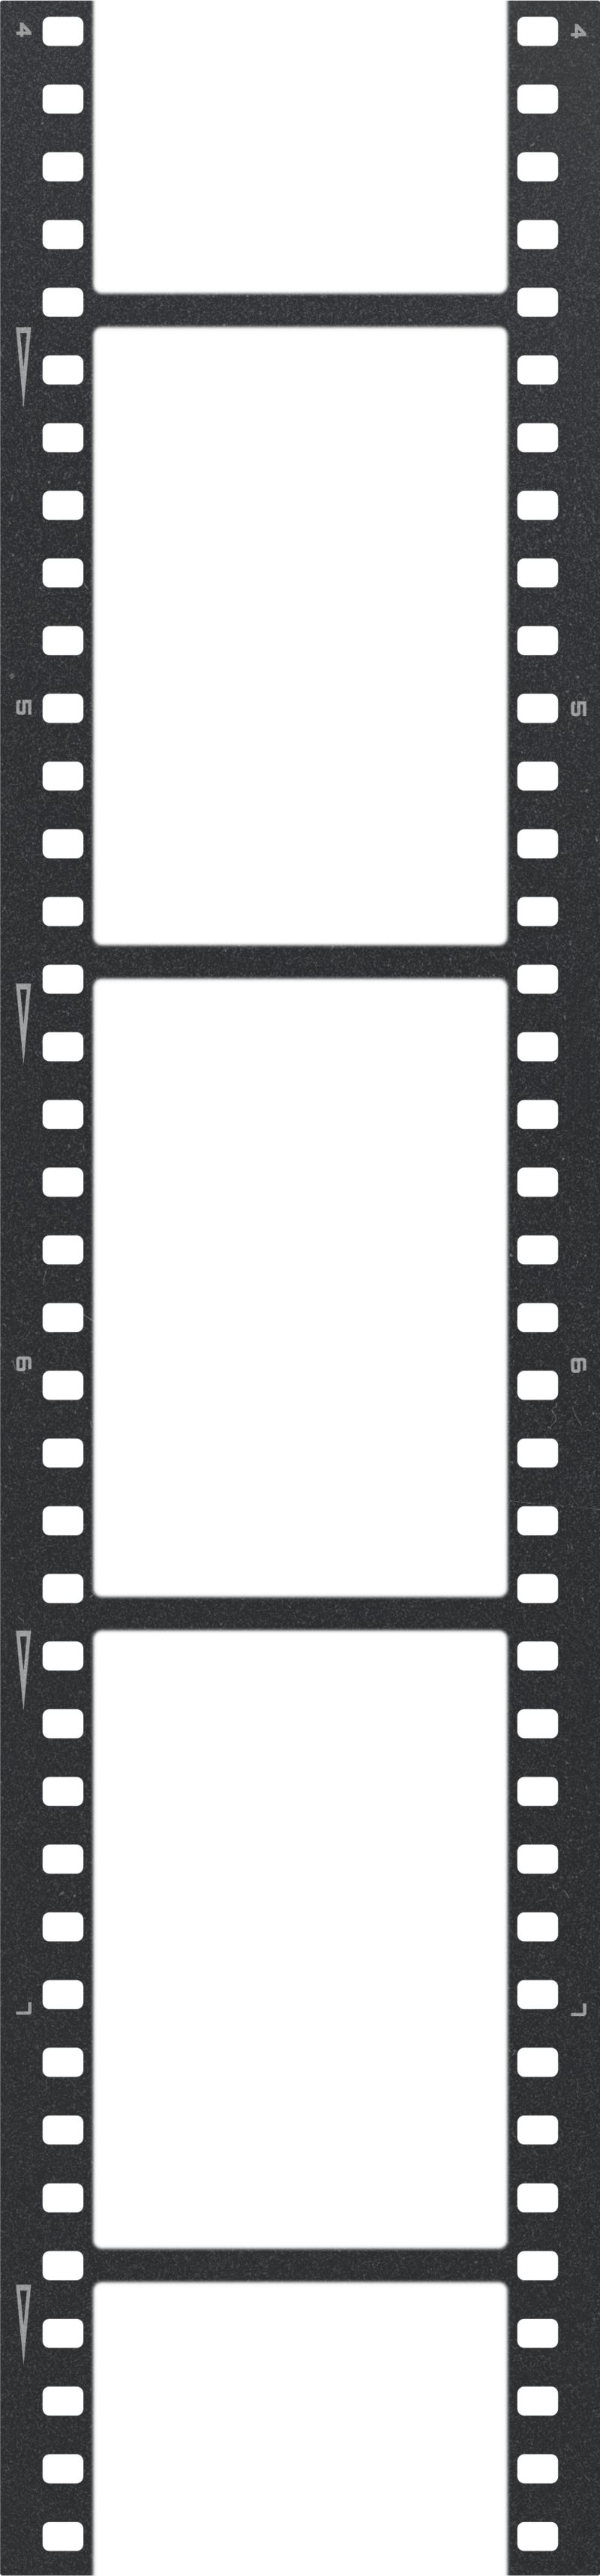 Film strip border used to frame in digitized film photos.